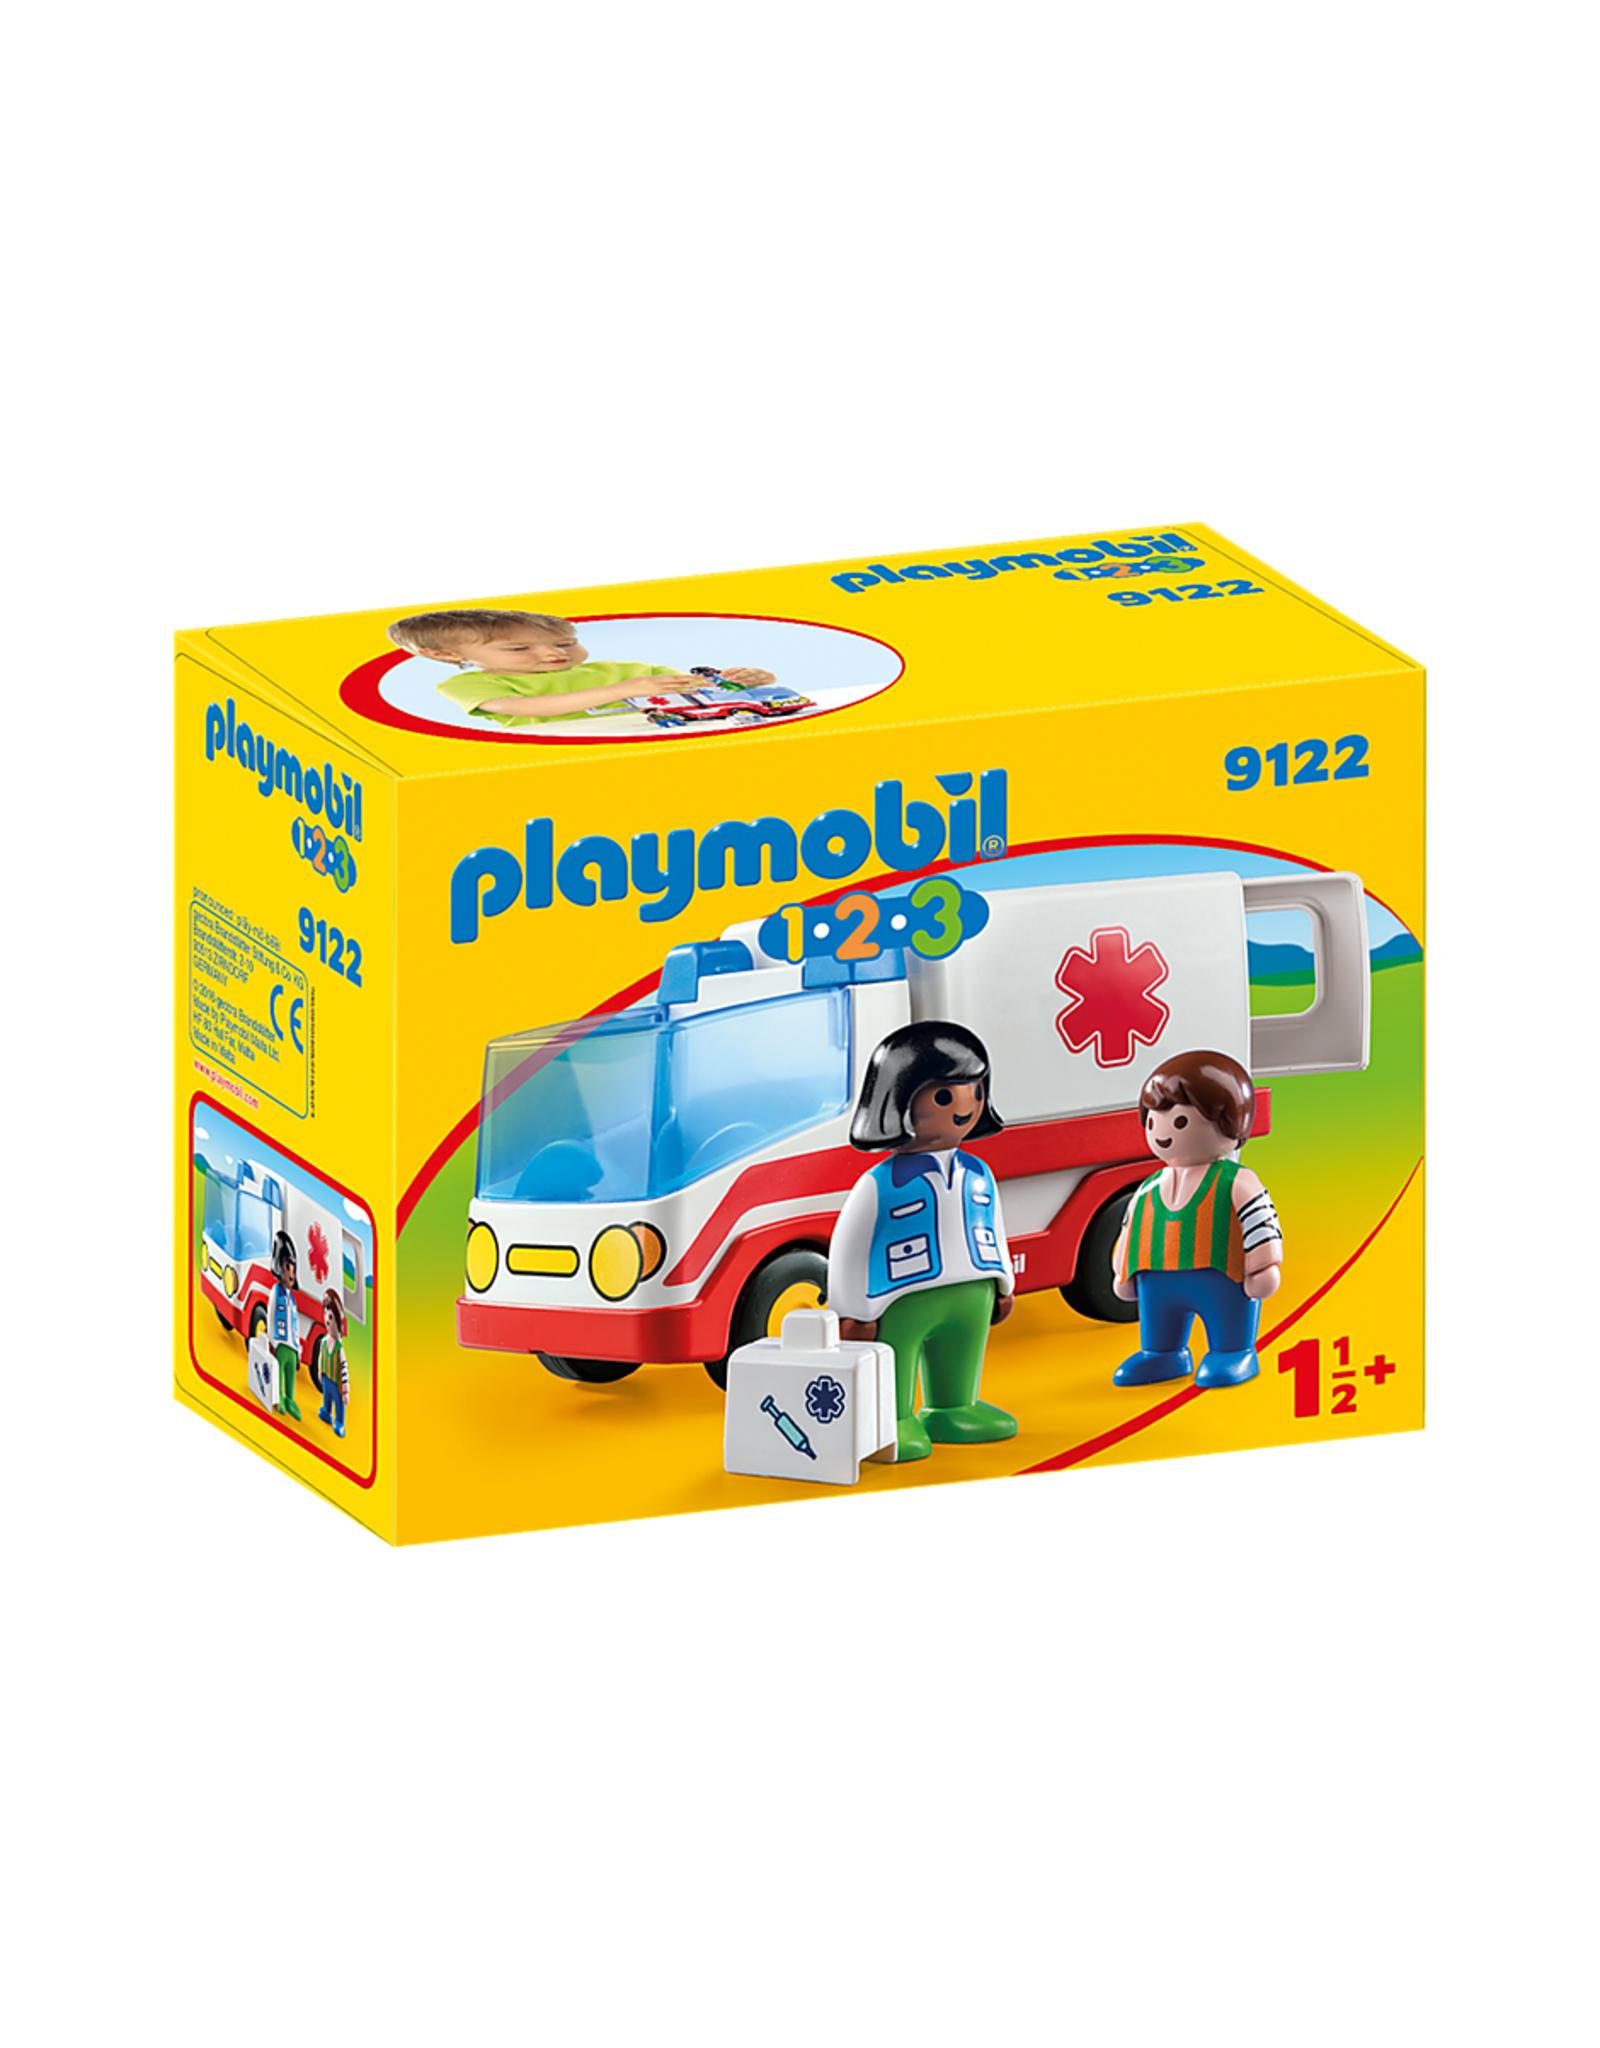 playmobil rescue